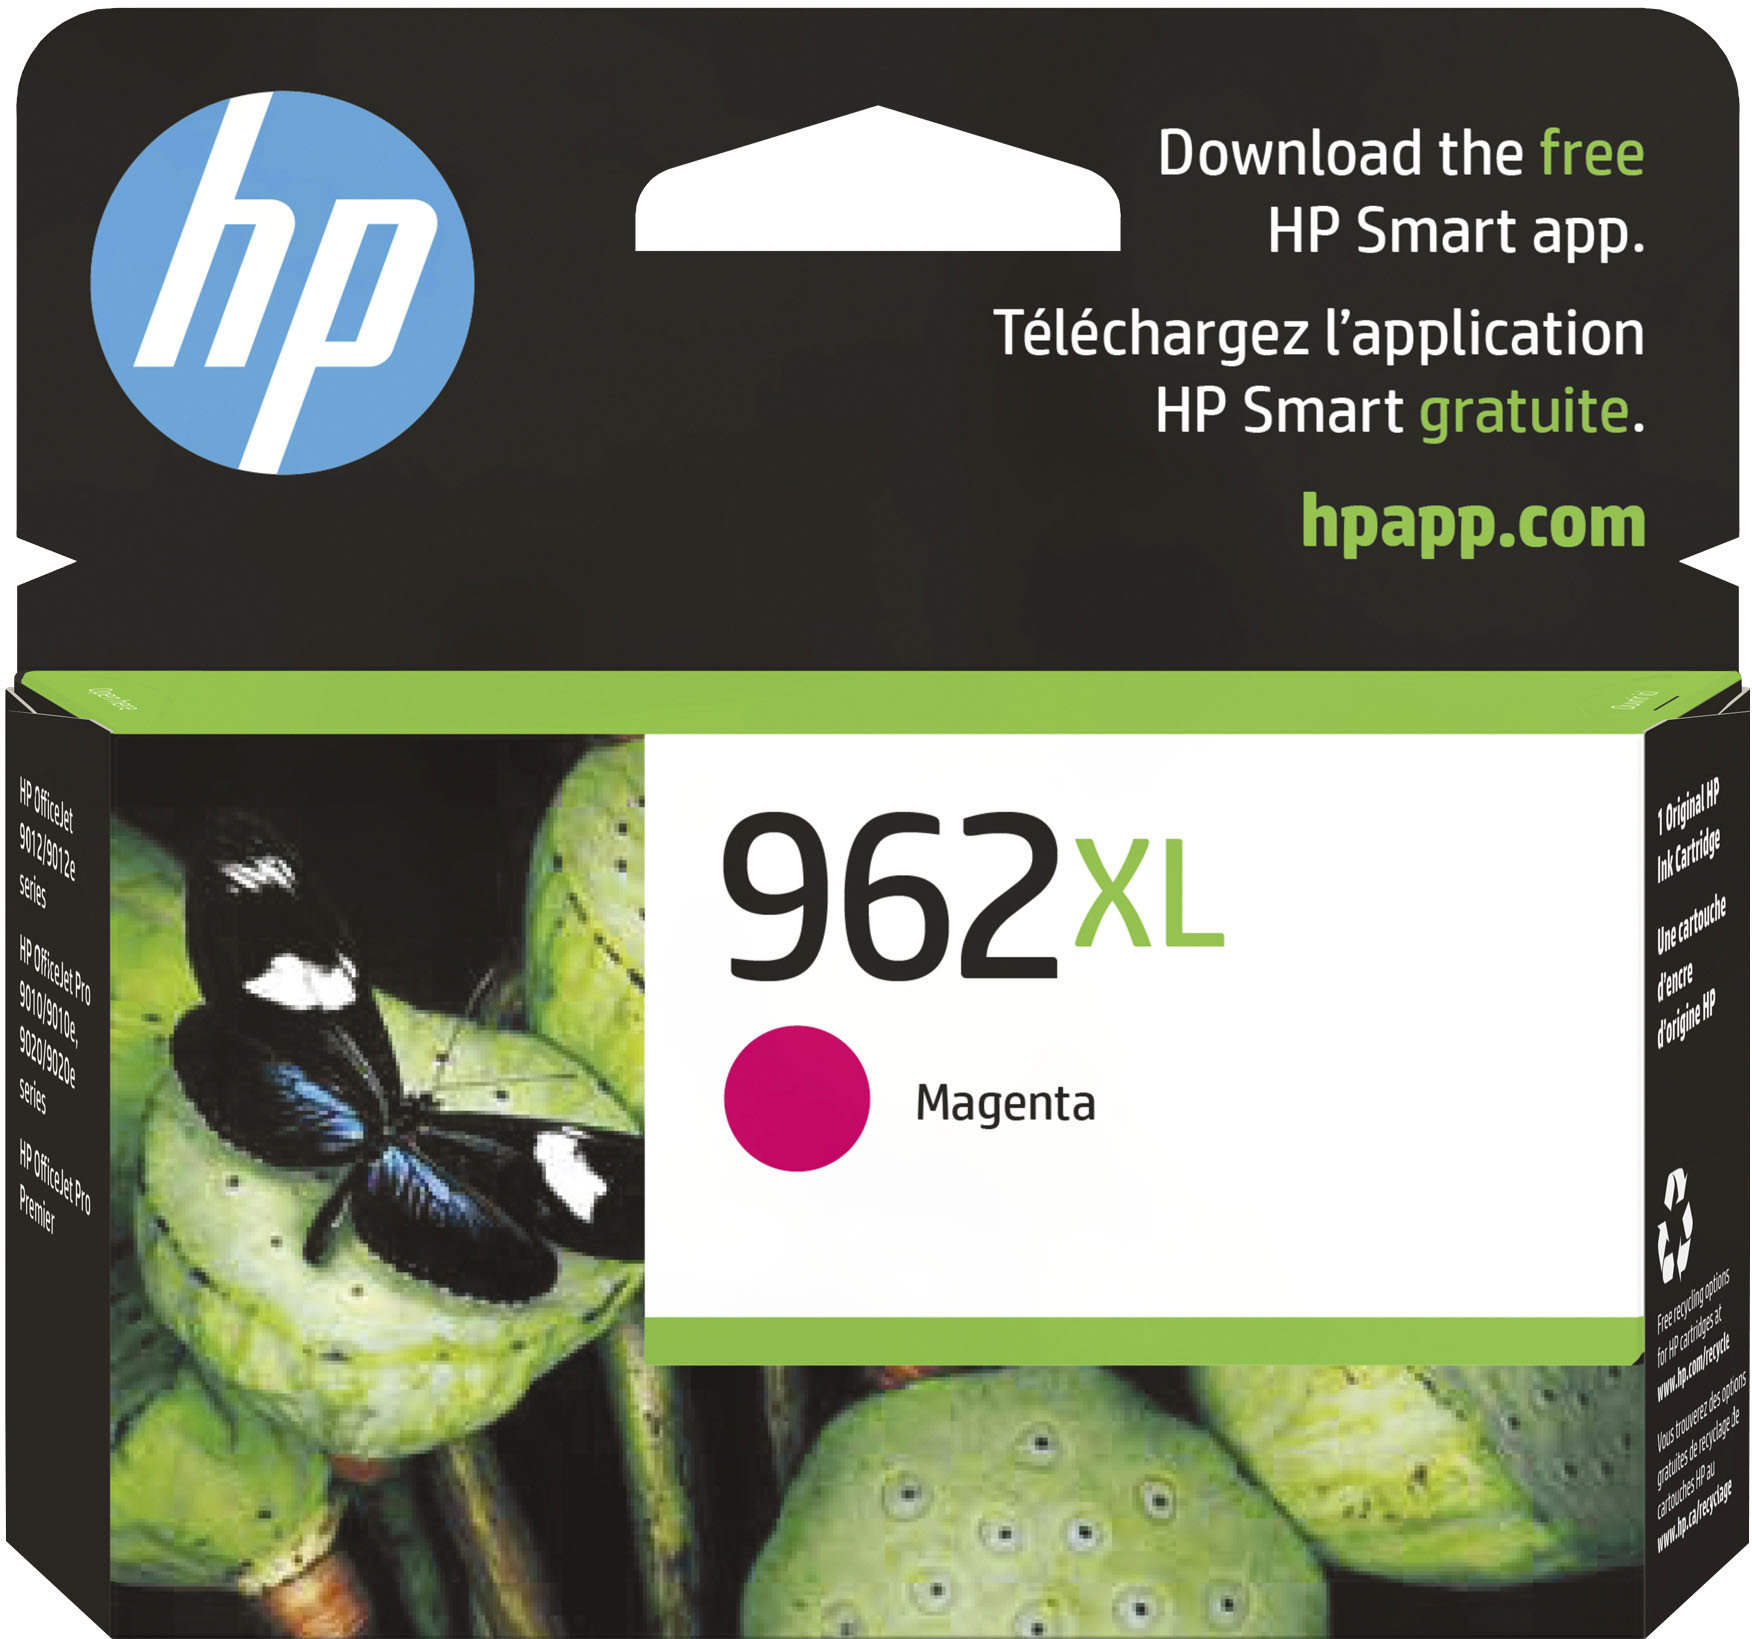 Compatible Ink Cartridge HP 963XL Magenta 23ml